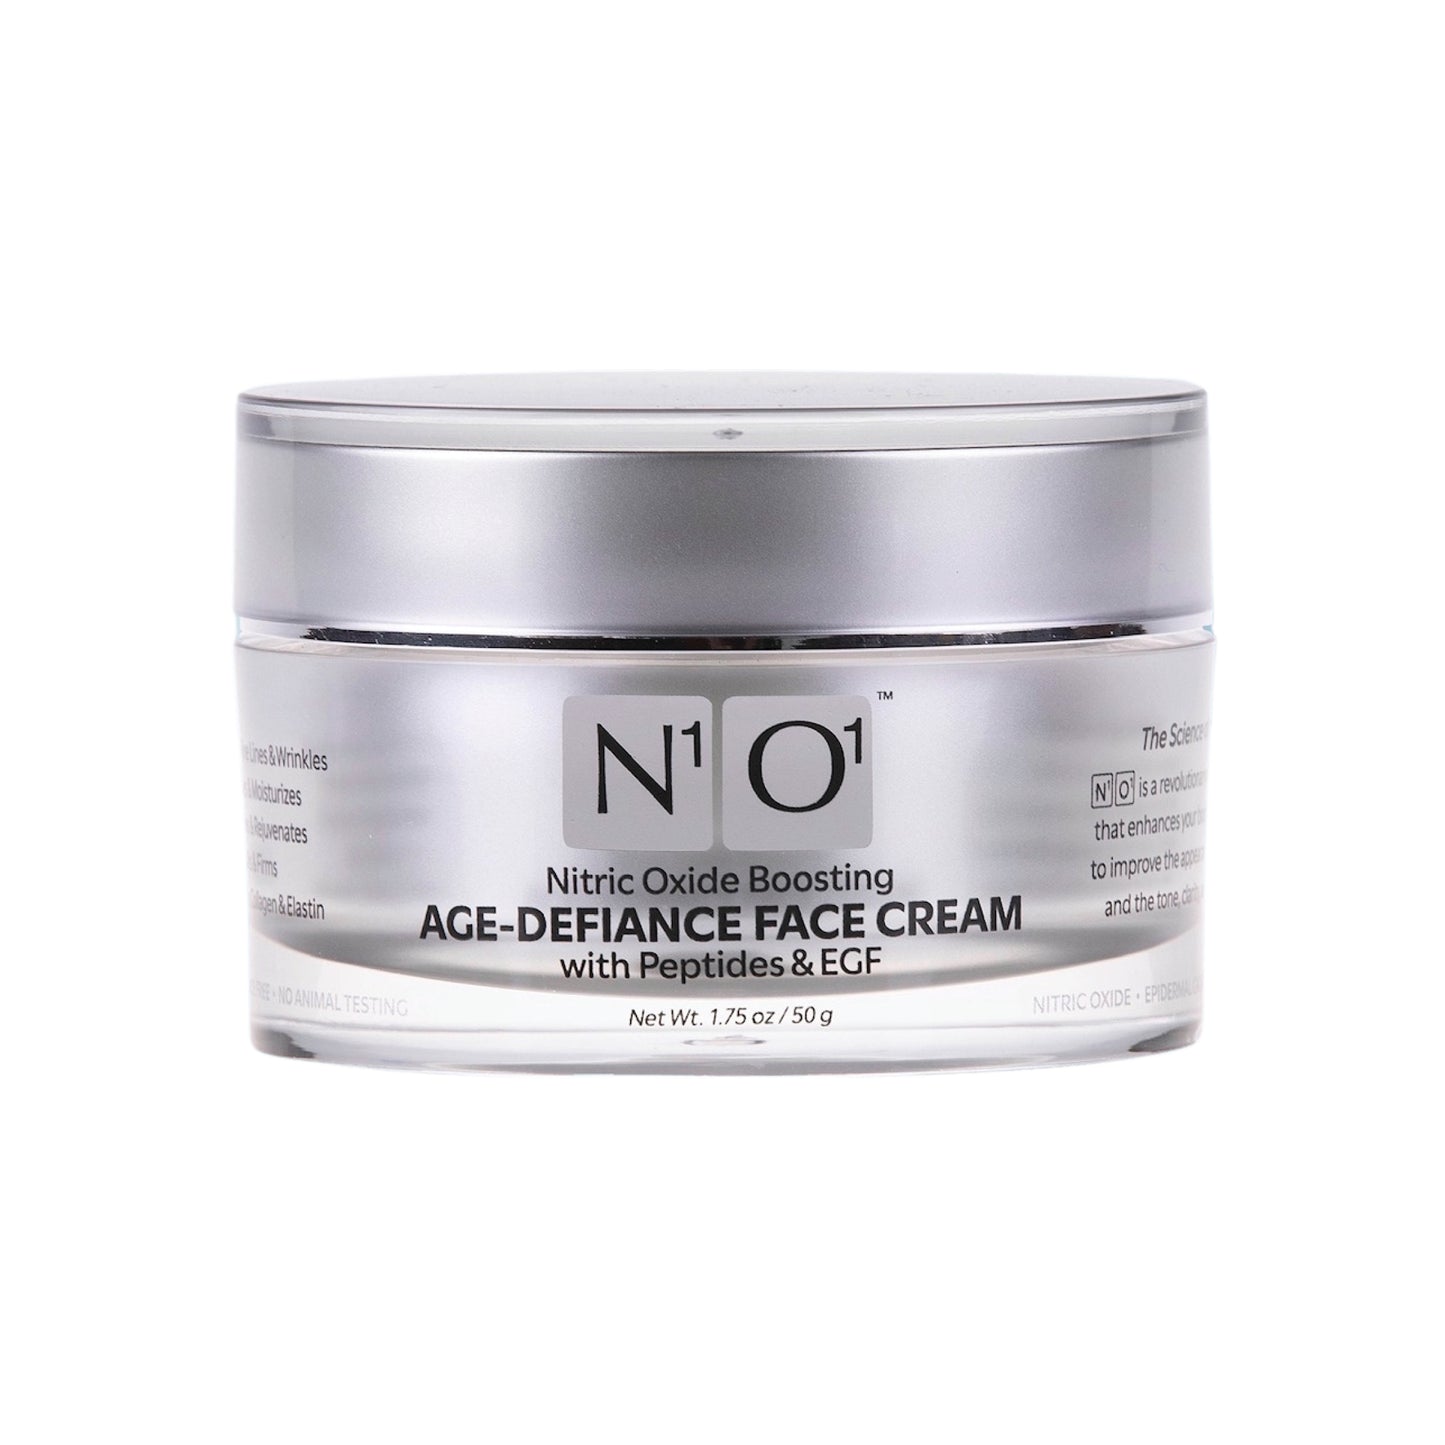 N1O1 Face Cream